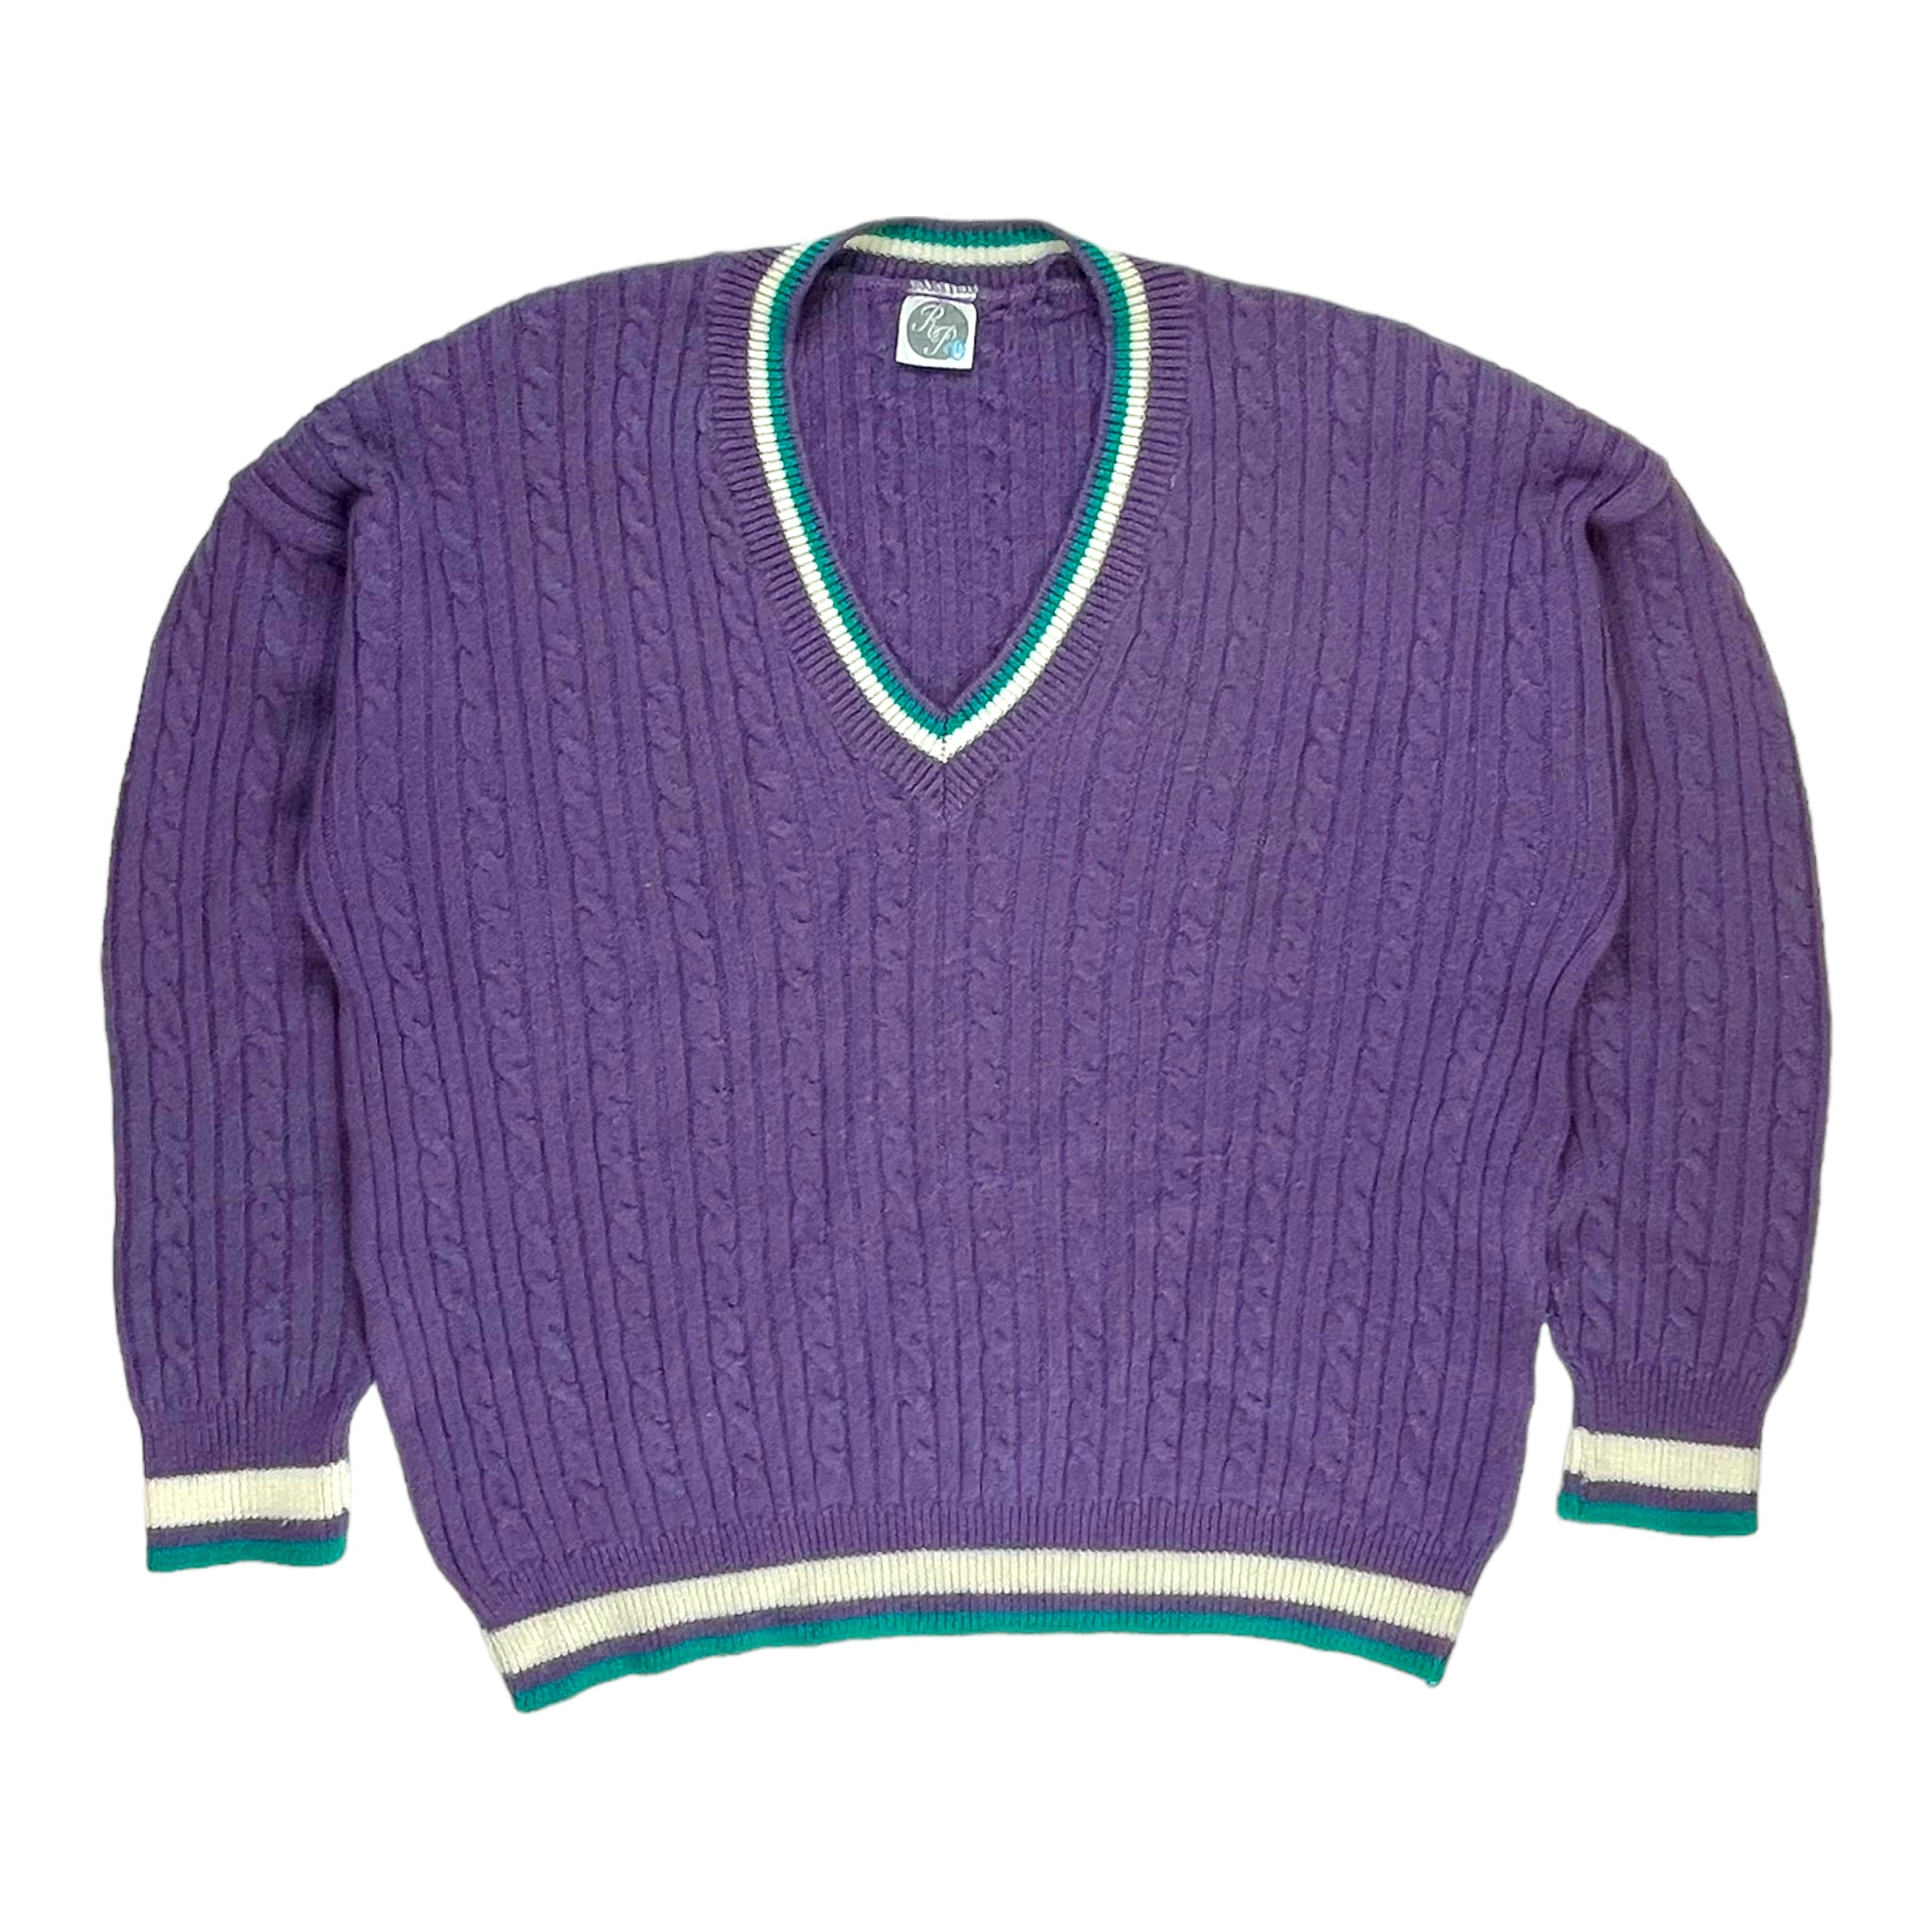 Vintage 80s V-neck Crickets sweater